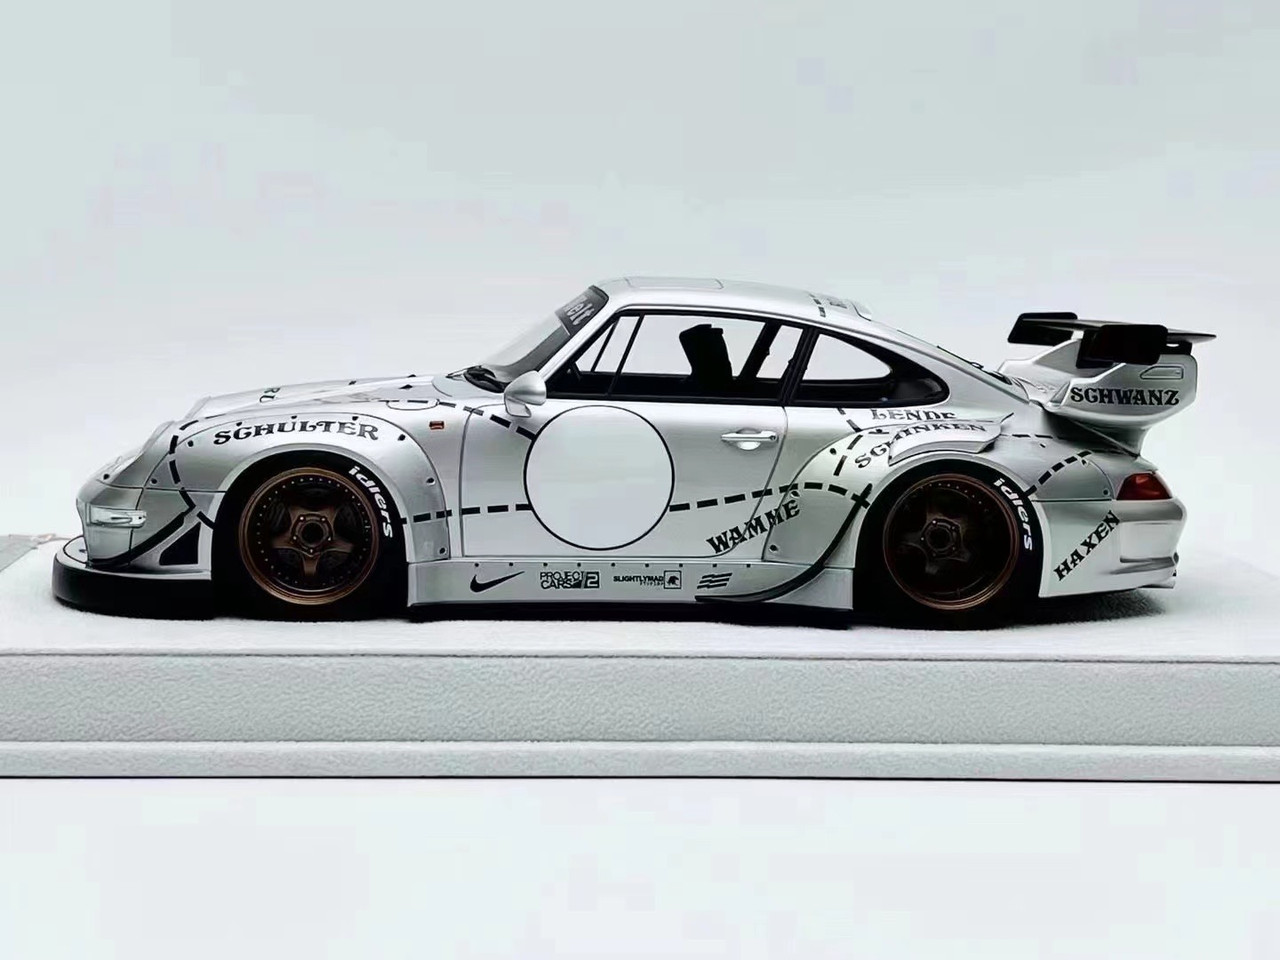 1/18 Fuelme Porsche 911 Rauh Welt Begriff 993 Silver Phantom 